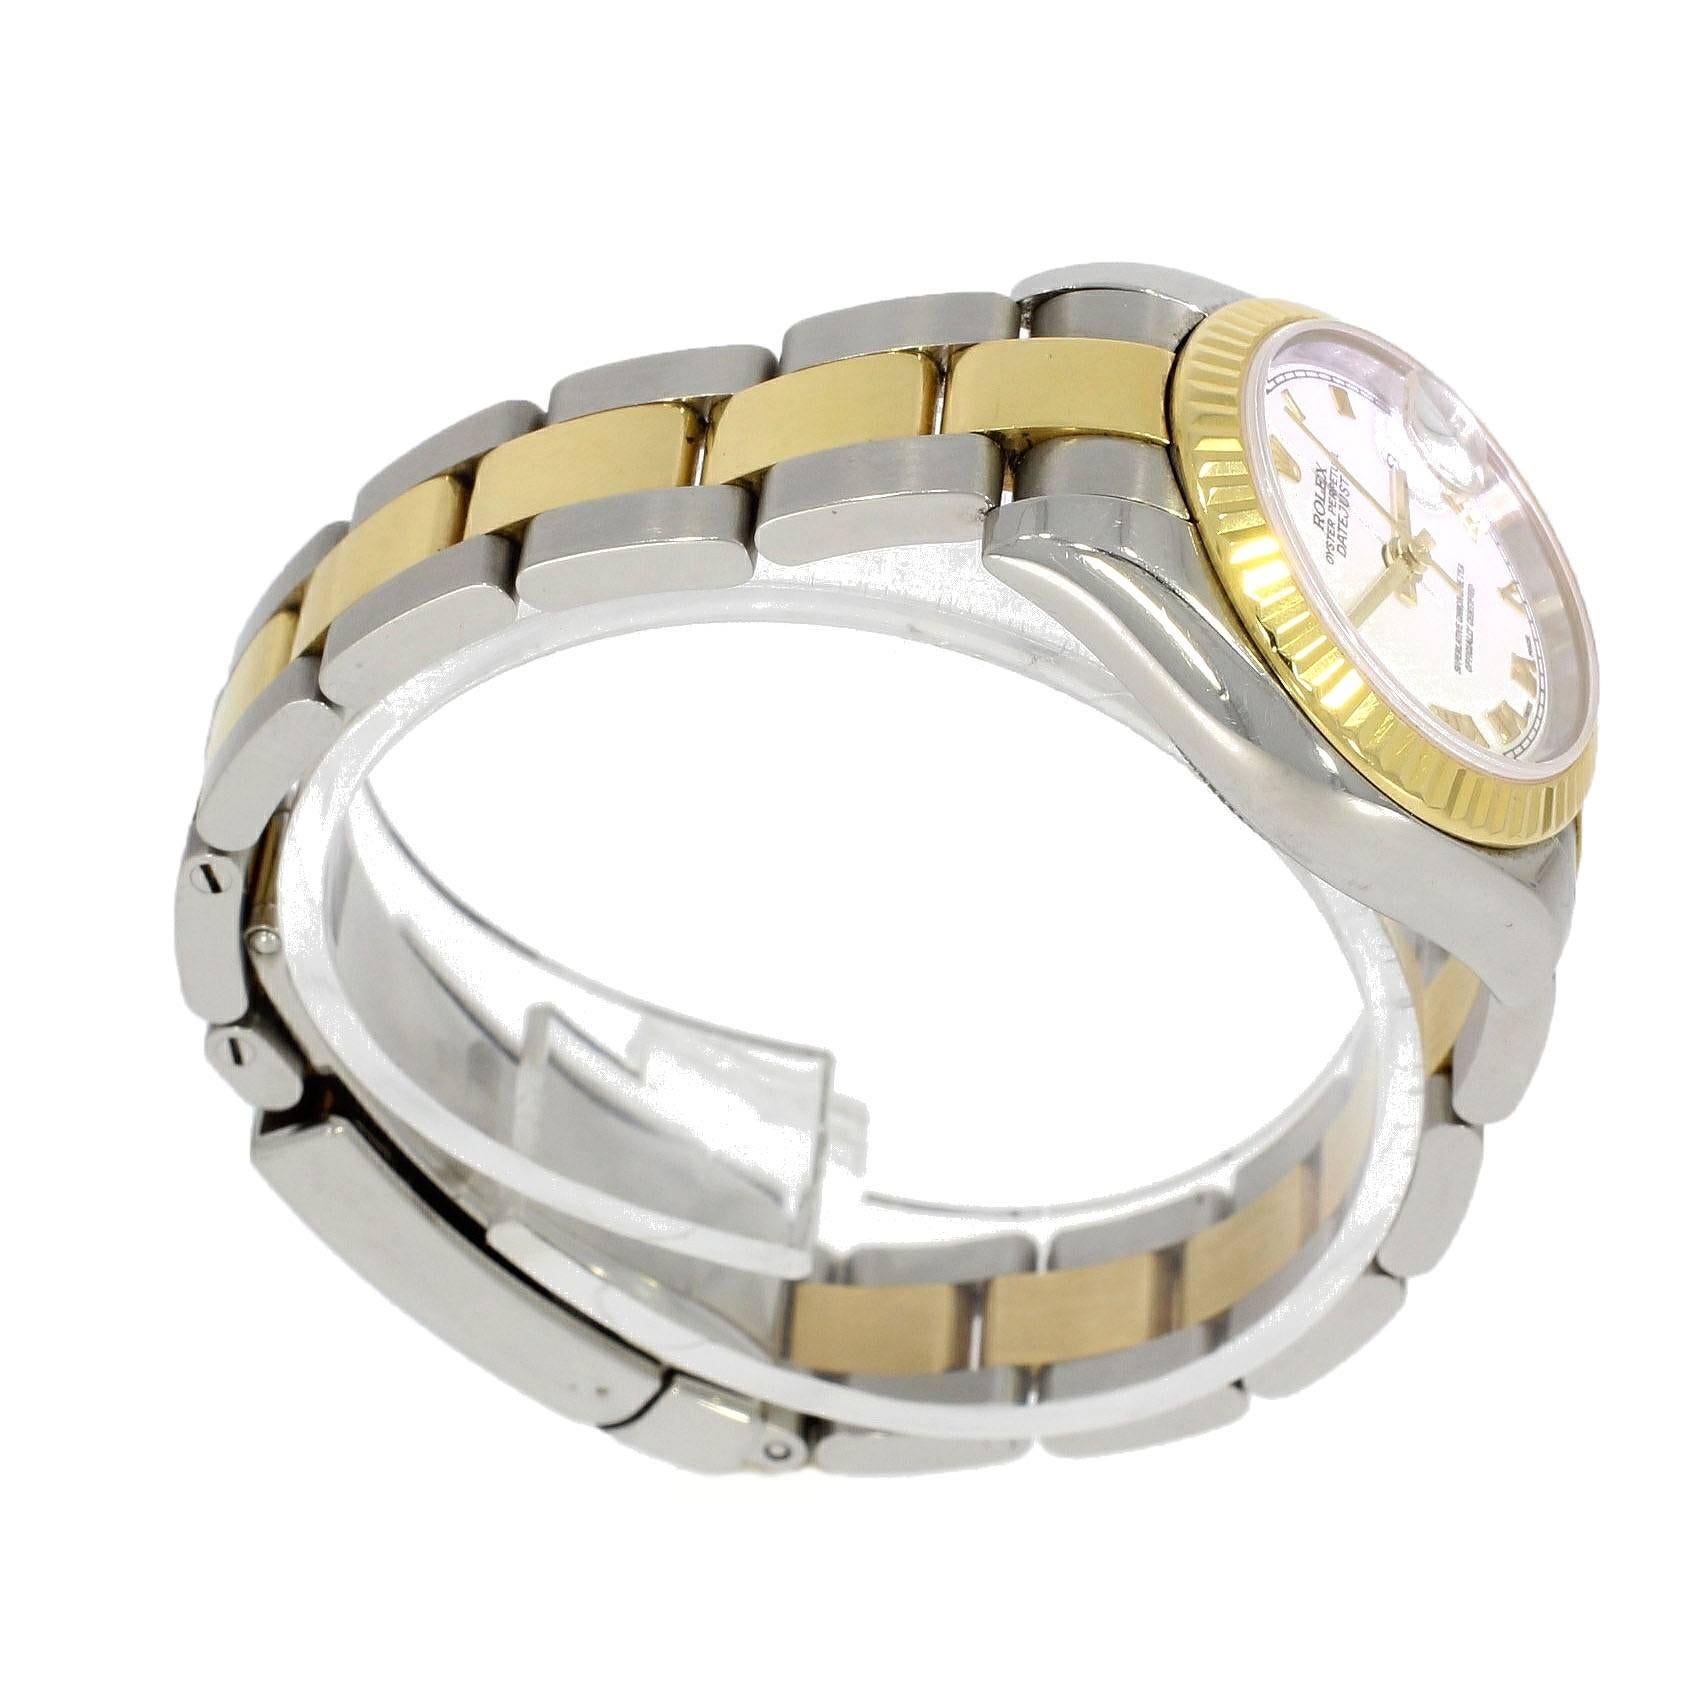 Rolex Ladies Perpetual Datejust Bracelet Wristwatch Ref 179173 For Sale 3